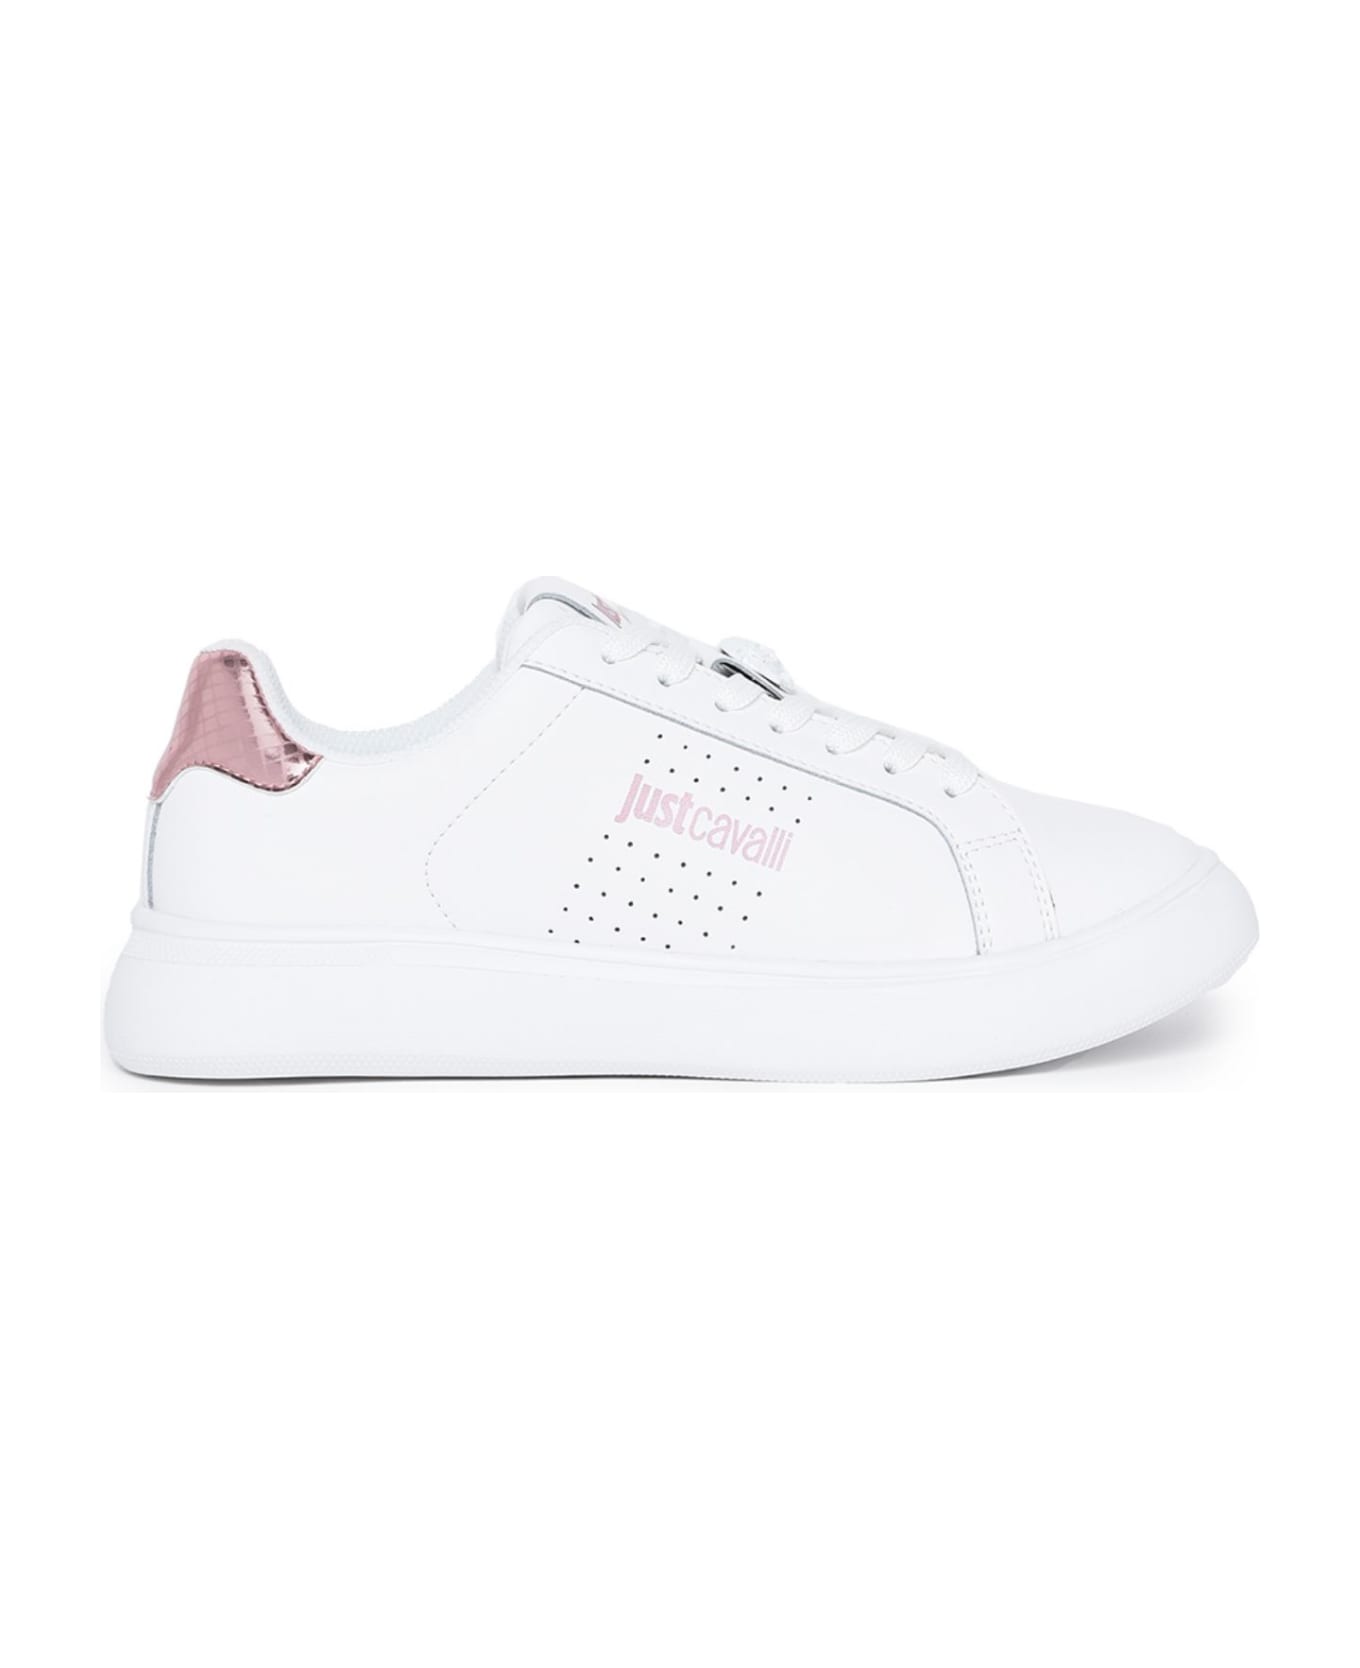 Just Cavalli White Sneakers - White